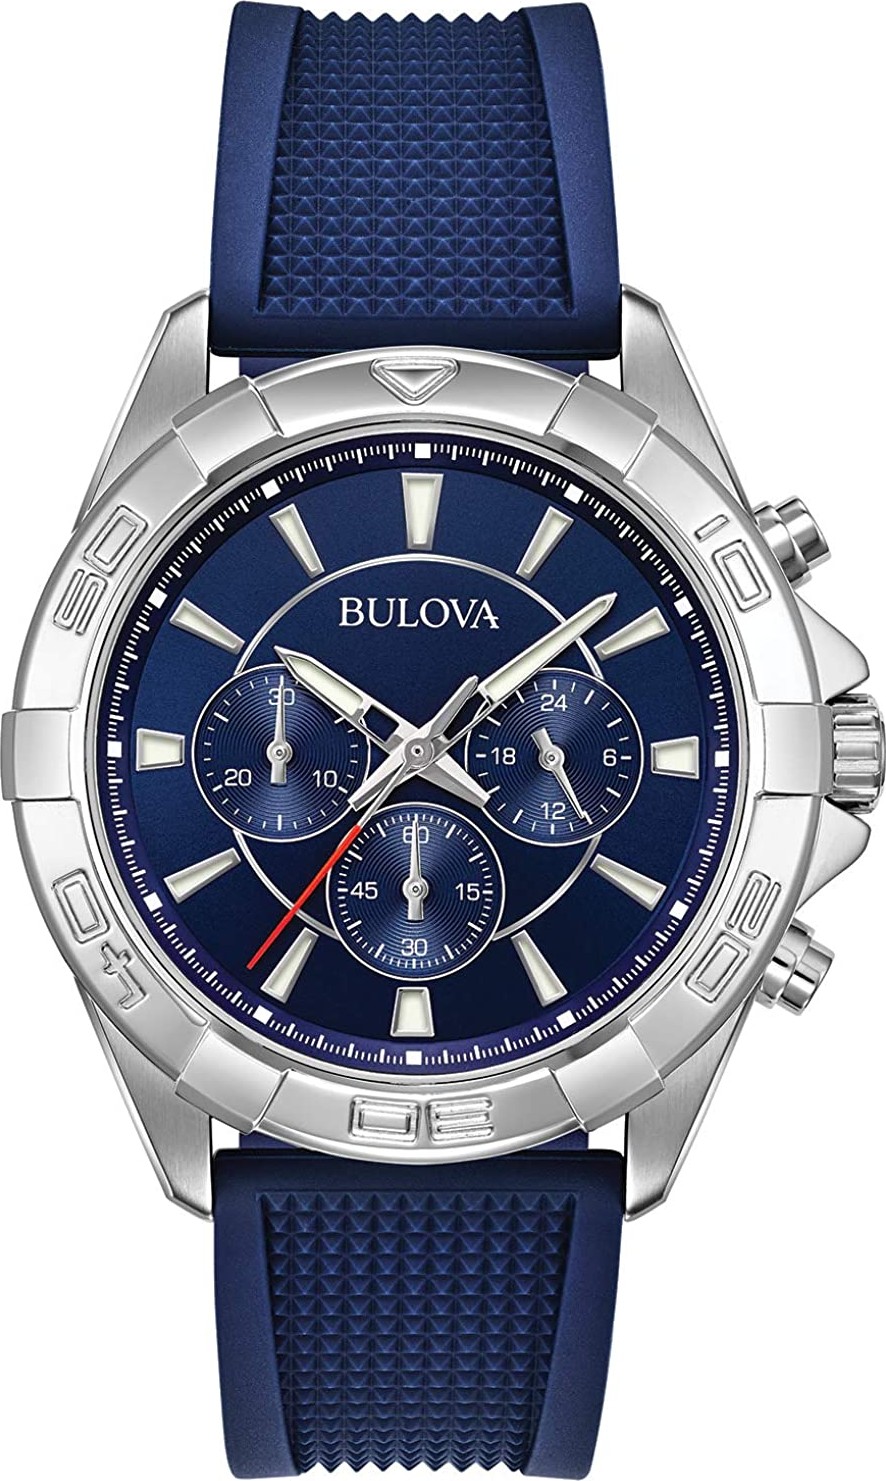 Bulova Chronograph Blue Dial Watch 43mm